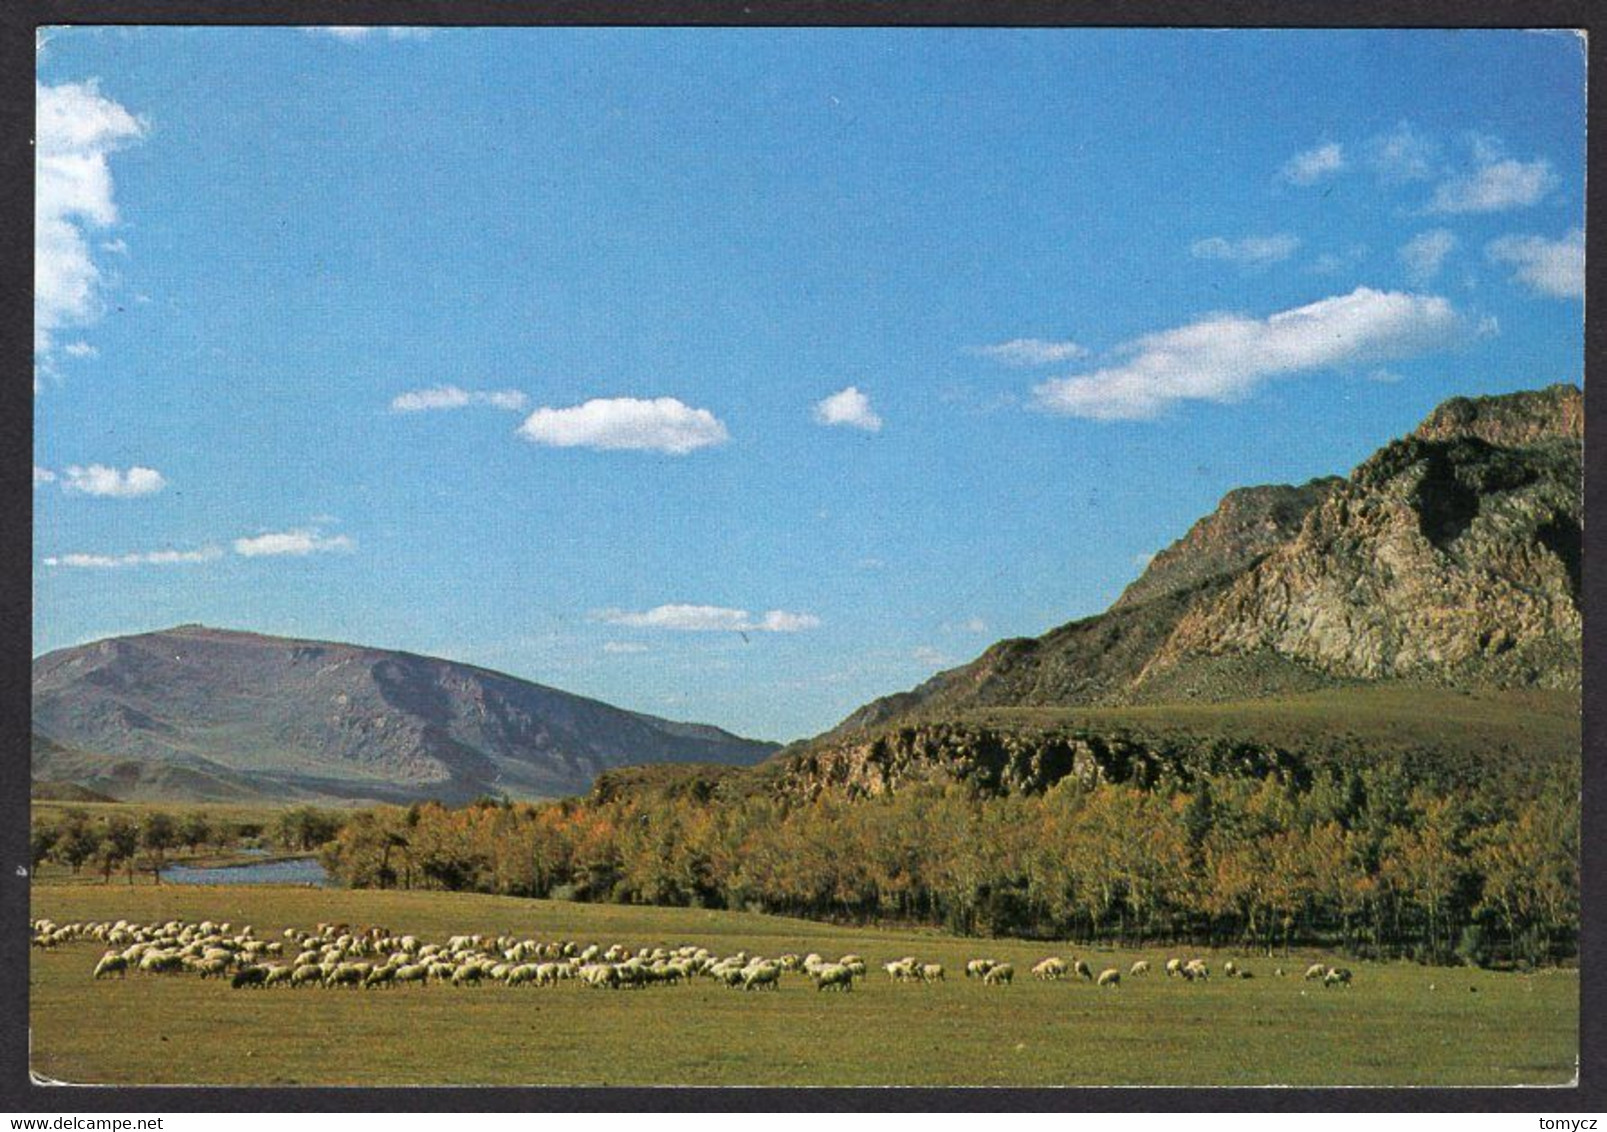 12x Postcards Mongolia 197?-198?, Used, Not Used - Mongolia